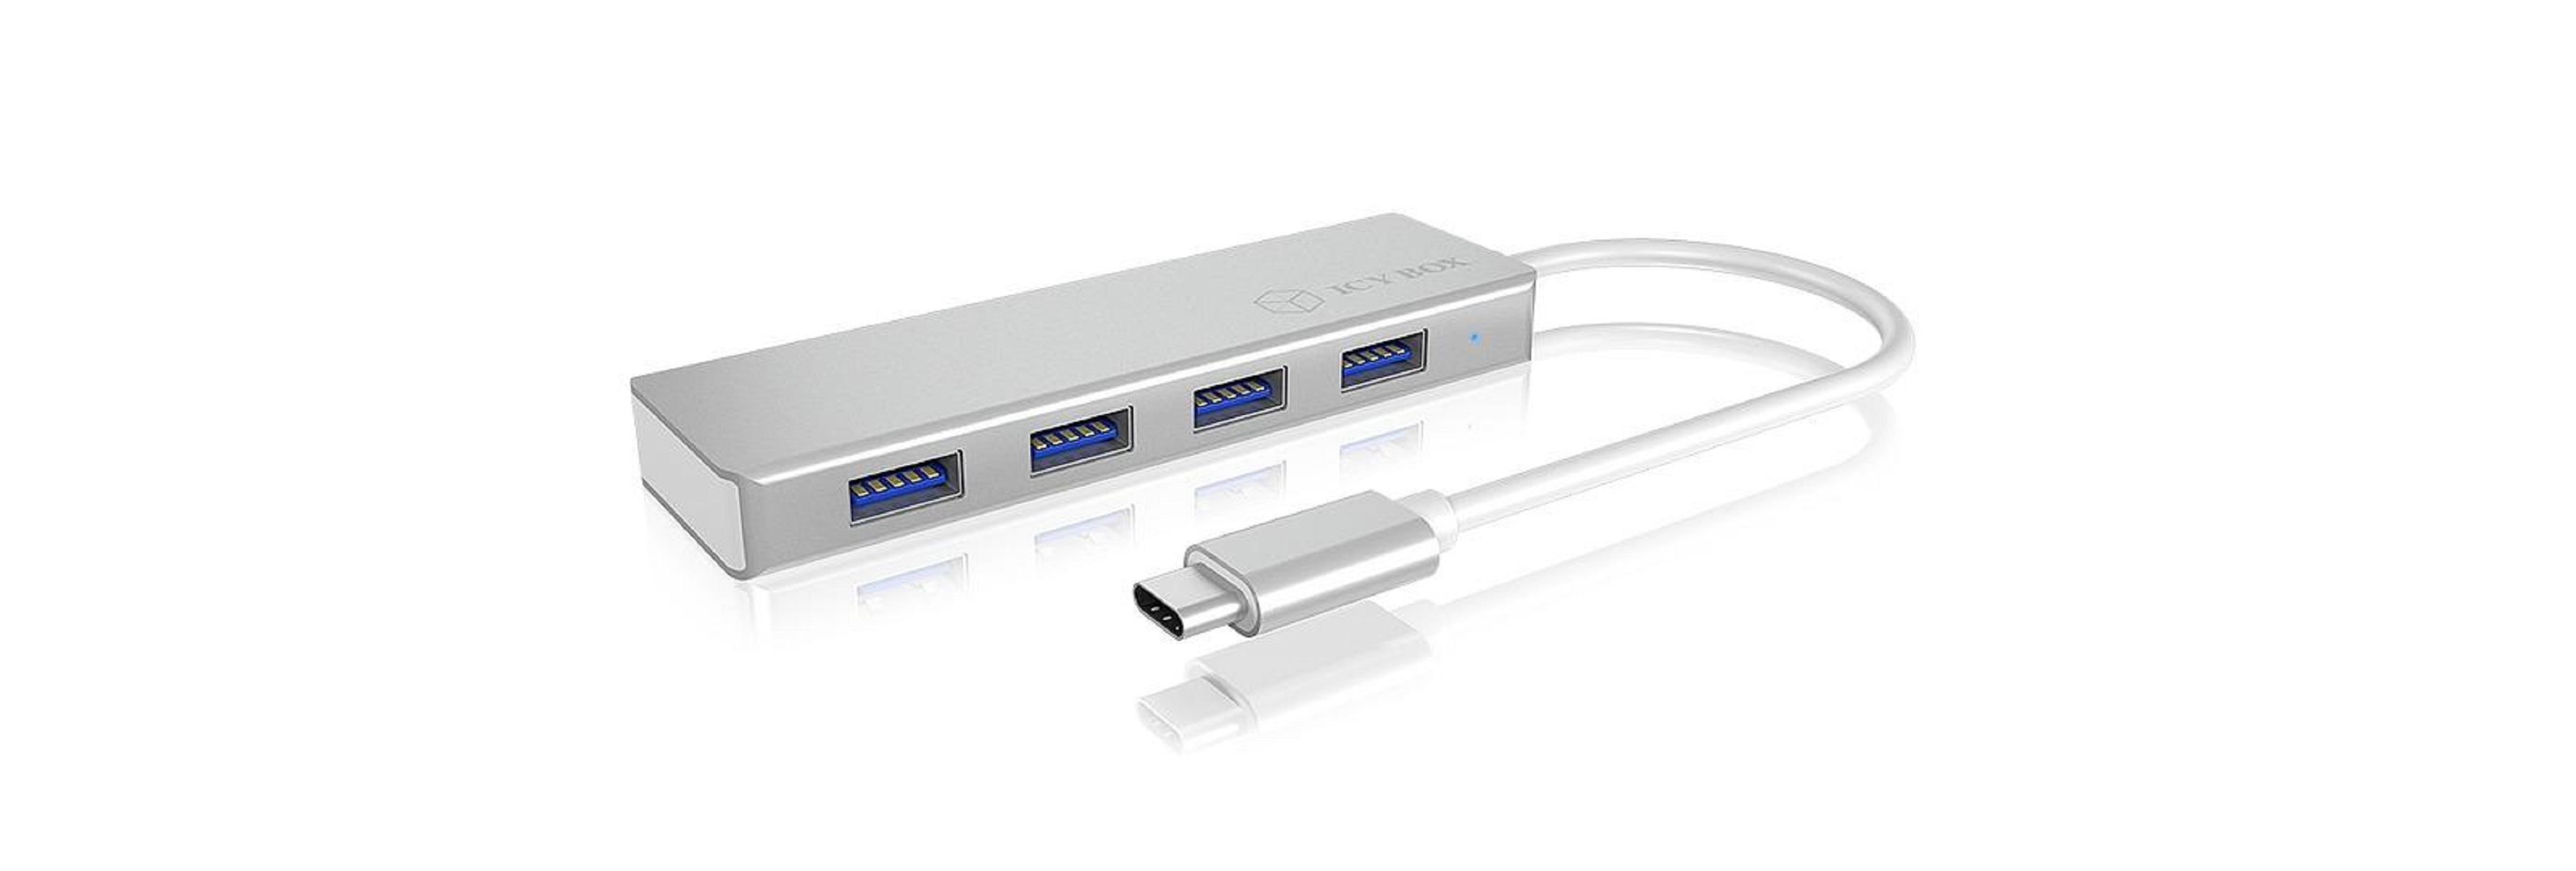 RAIDSONIC IB-HUB1425-C3 USB Hub, USB Verteiler, Silber